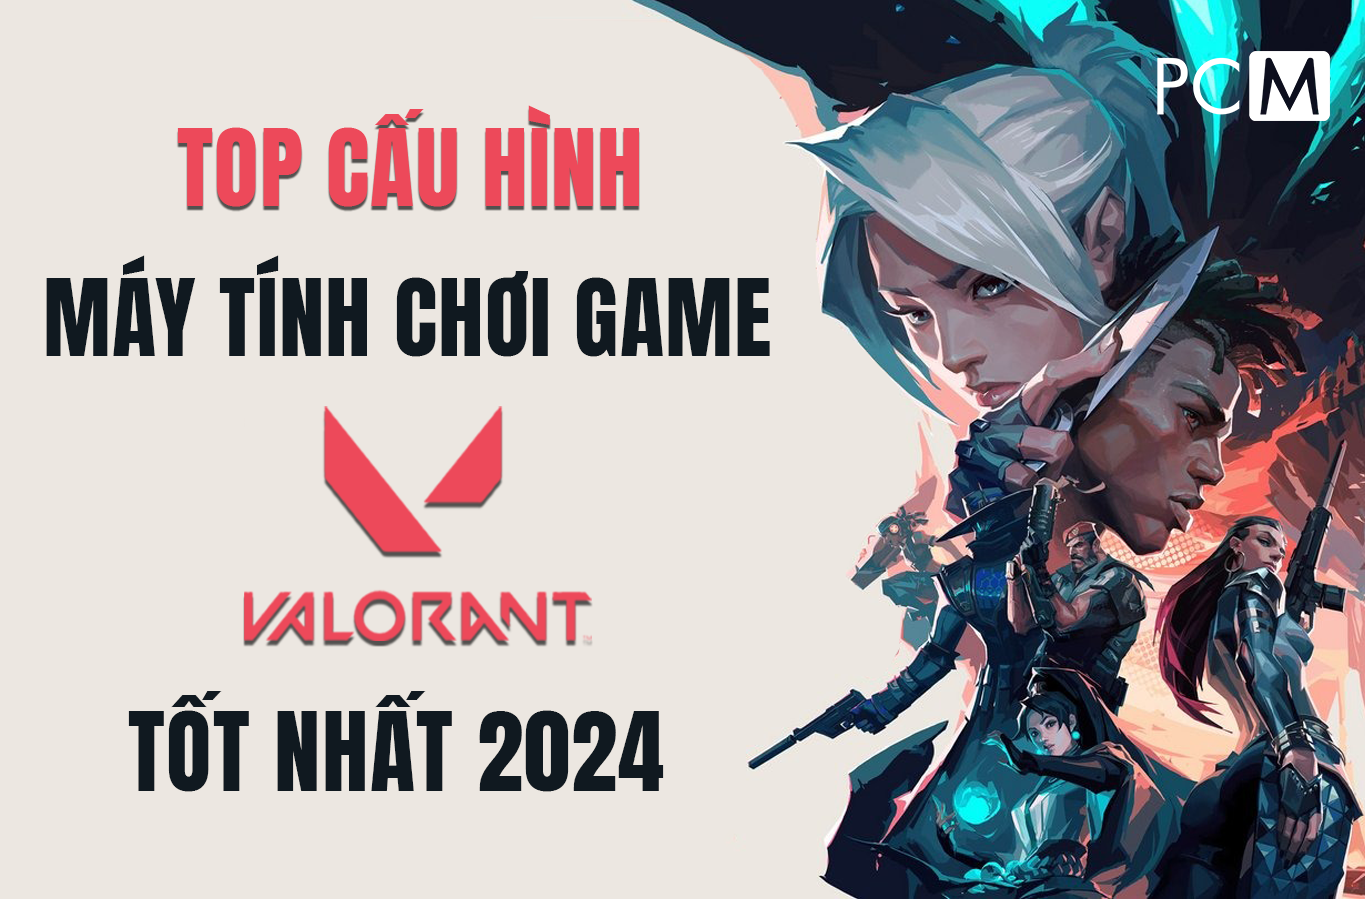 op-cau-hinh-may-choi-game-valorant-tot-nhat-2024-pcm_3